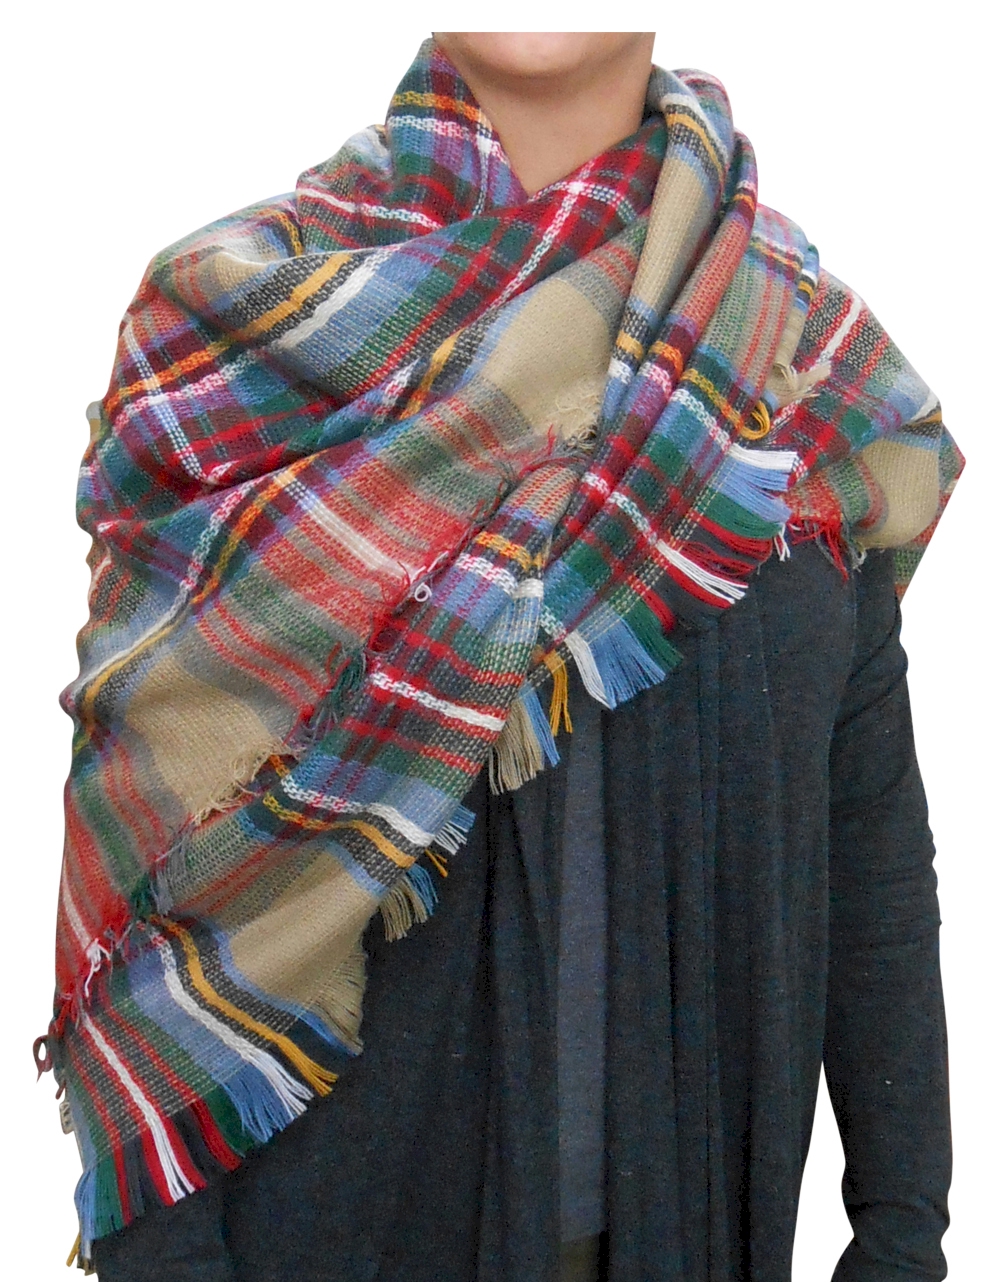 Designer-Style Tartan Checked Plaid Blanket Scarf - CAMEL - CLOSEOUT